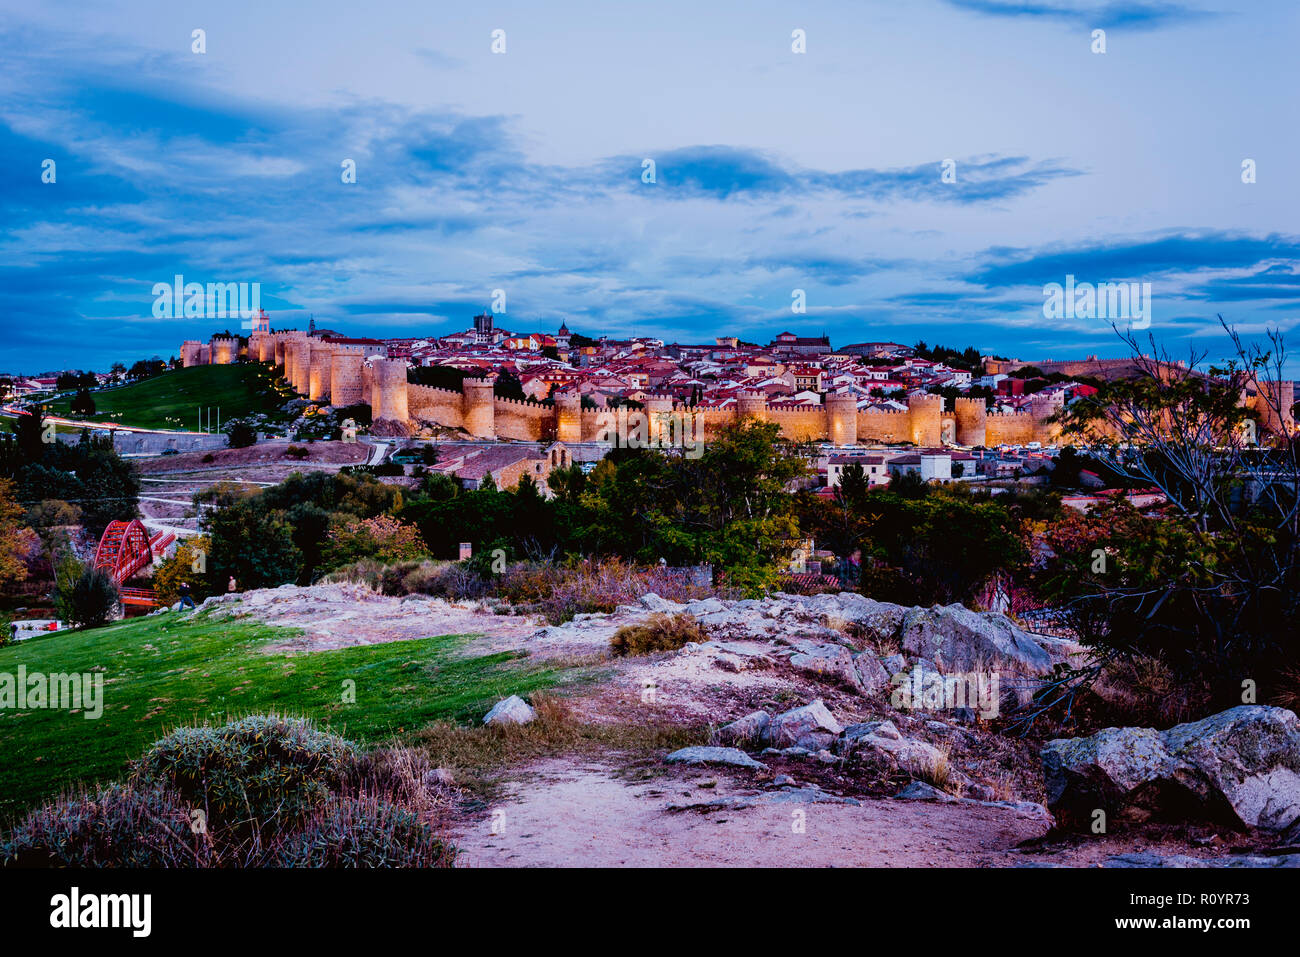 View from Cuatro Postes over the medieval city walls of Avila at dusk. Avila, Castilla y Leon, Spain, Europe Stock Photo